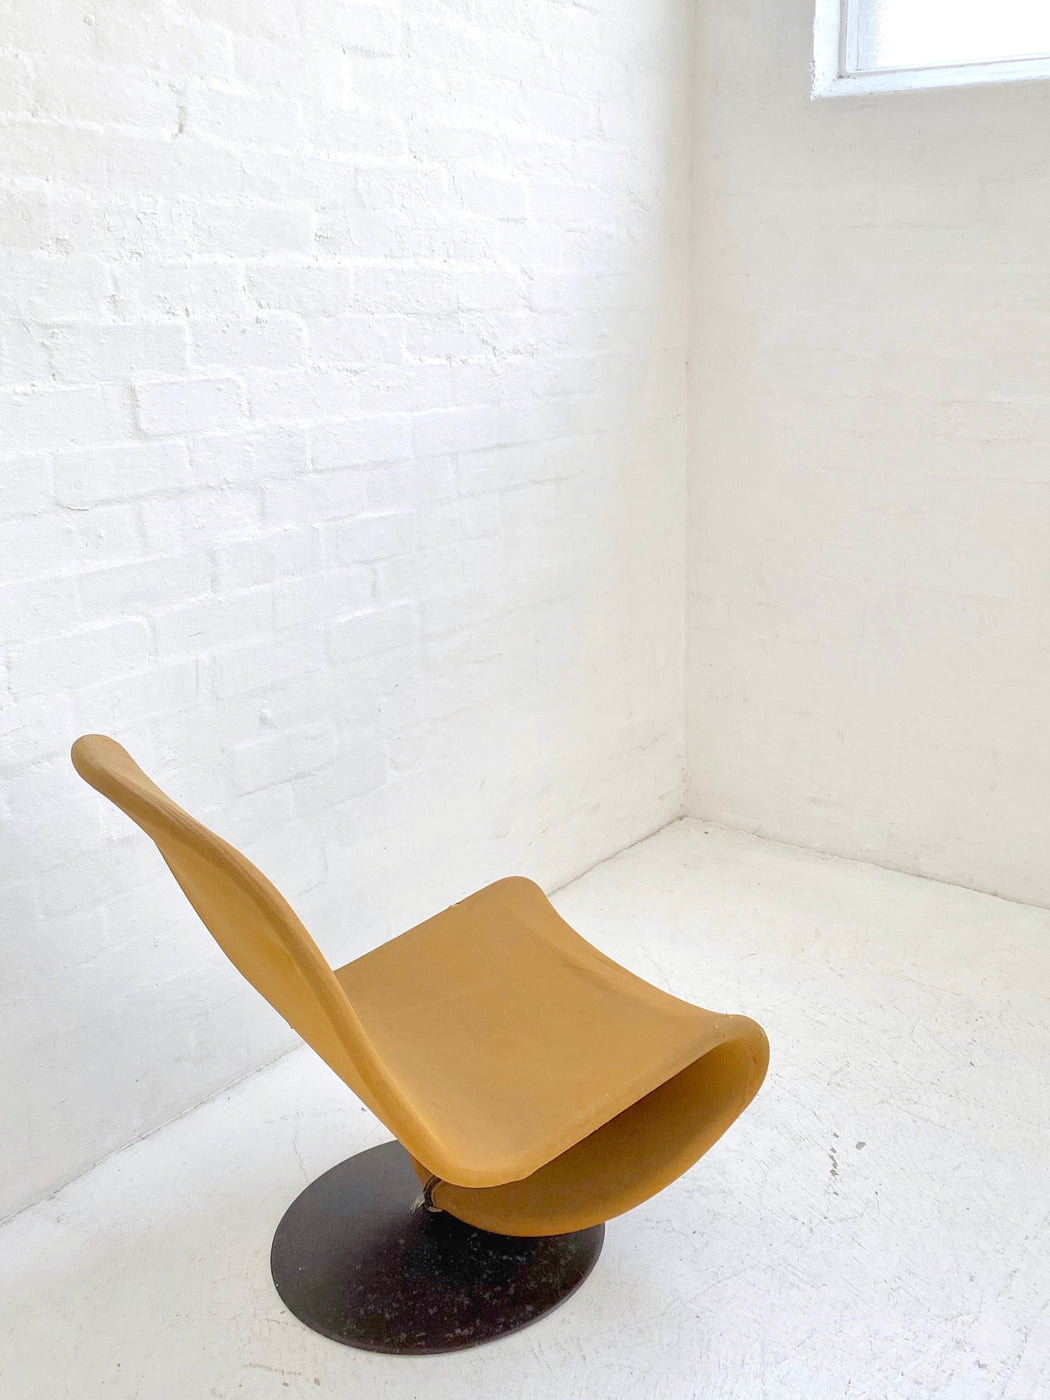 Verner Panton ‘System 123’ Chair